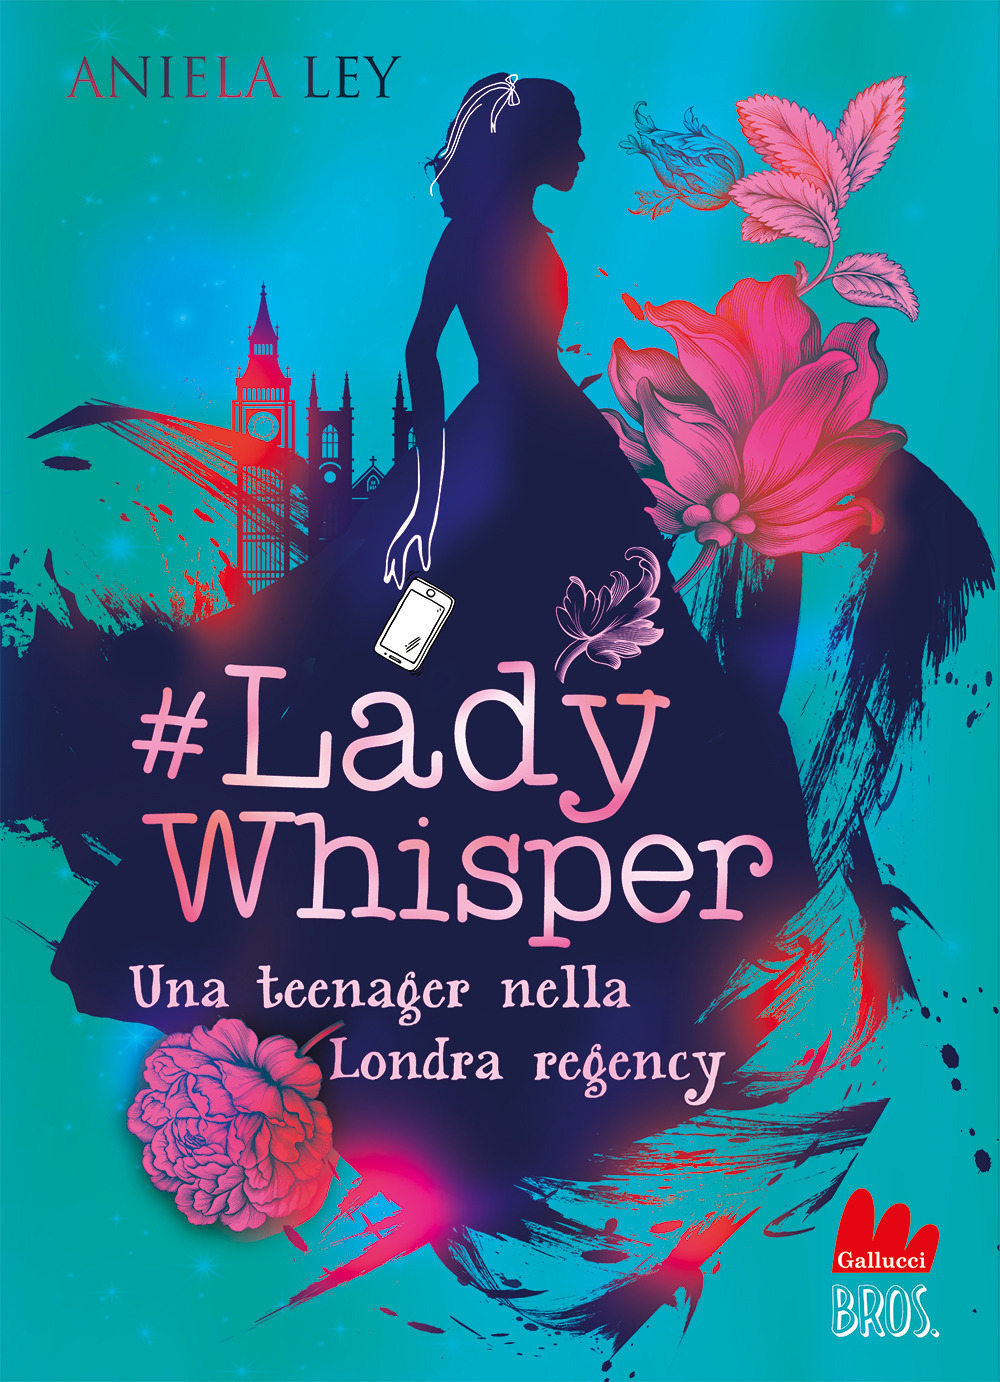 Copertina libro #Lady Whisper. Una teenager nella londra regency.